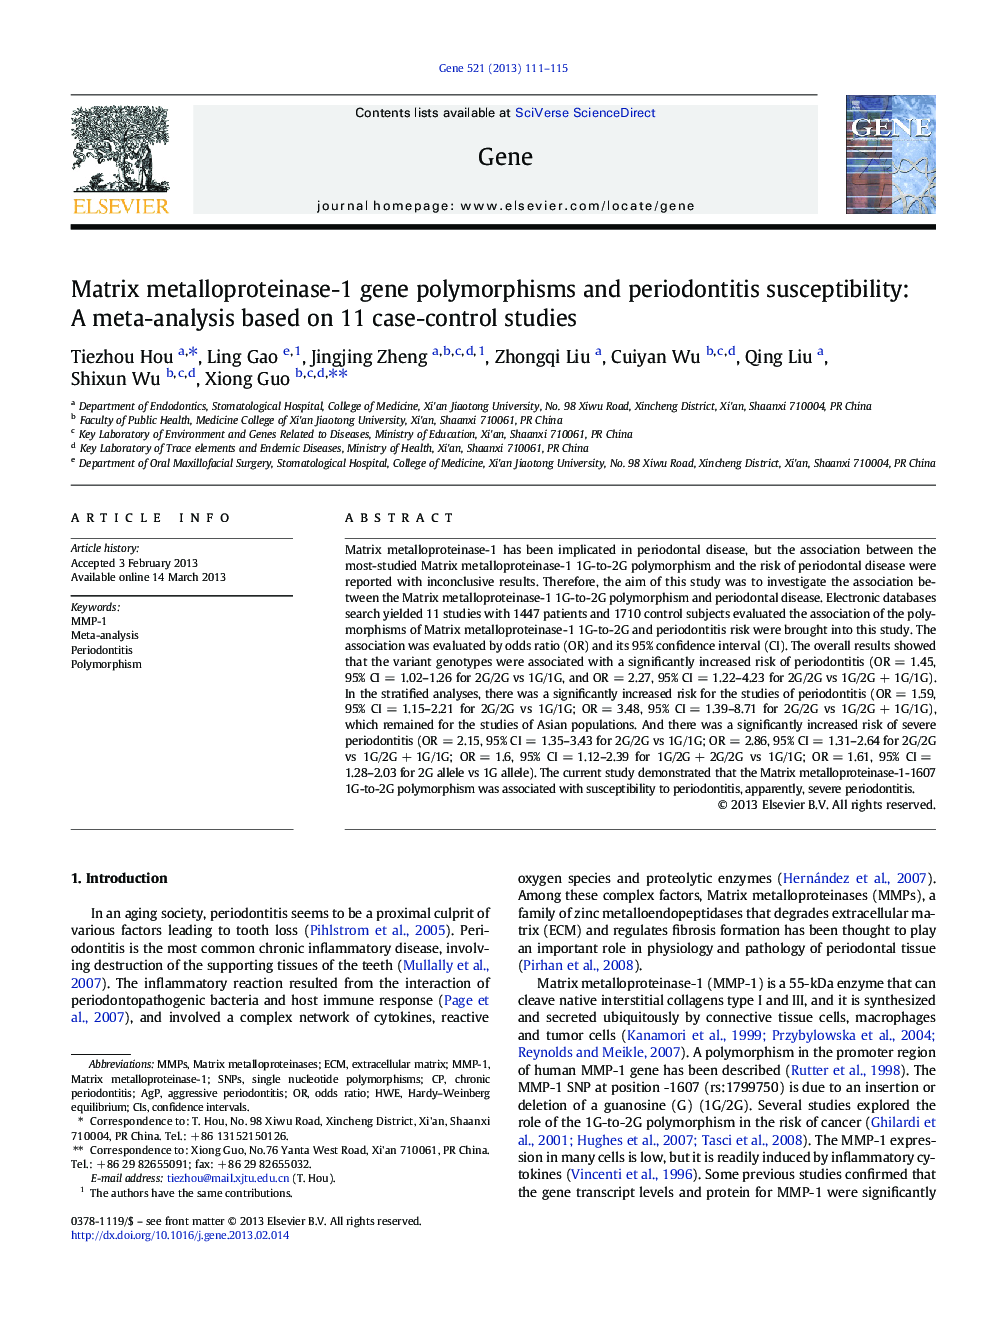 Matrix metalloproteinase-1 gene polymorphisms and periodontitis susceptibility: A meta-analysis based on 11 case-control studies